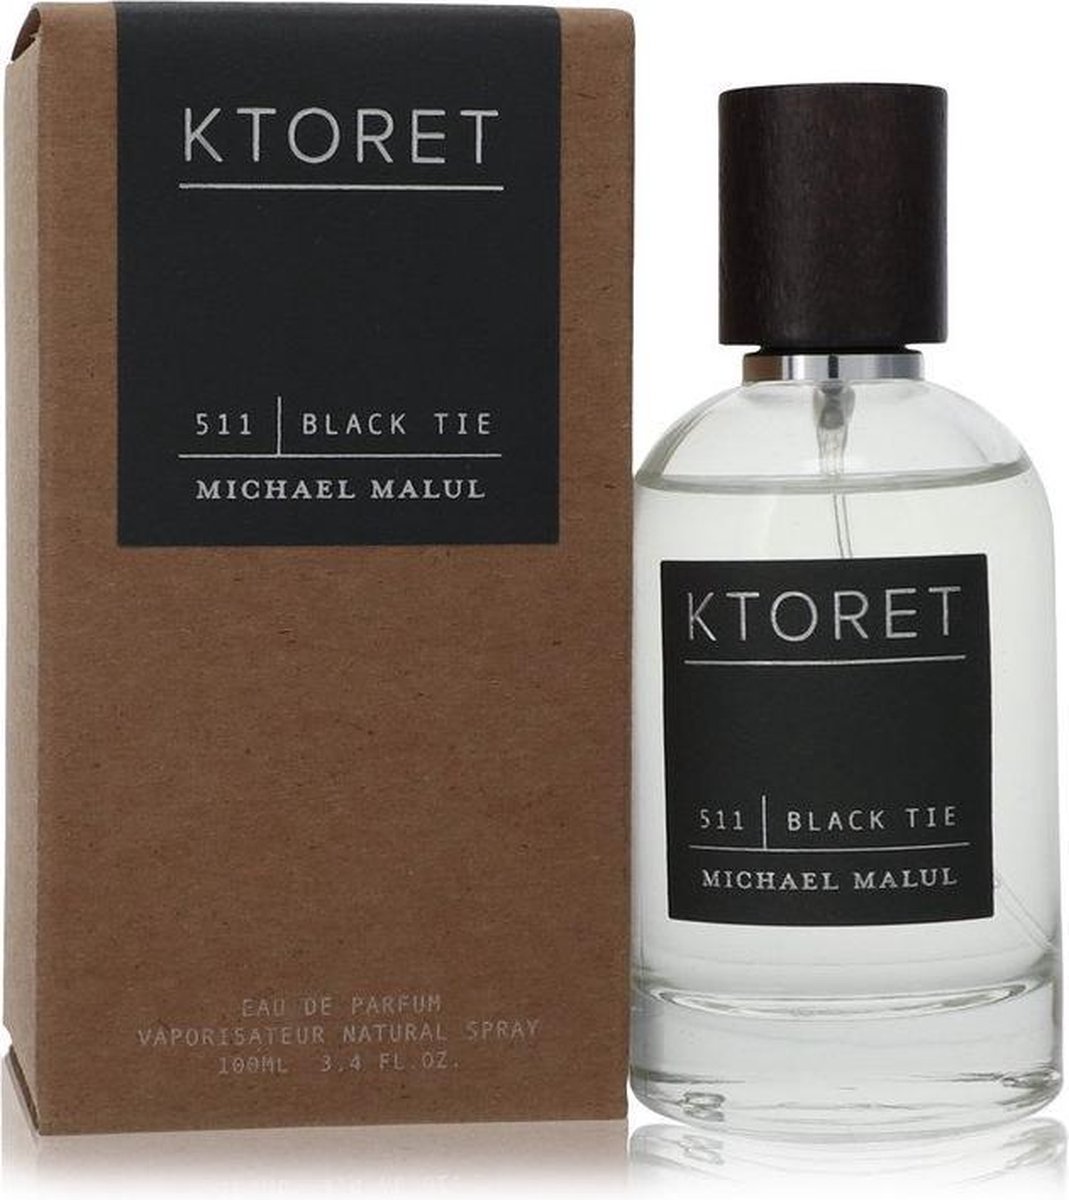 Ktoret 511 Black Tie by Michael Malul 100 ml - Eau De Parfum Spray